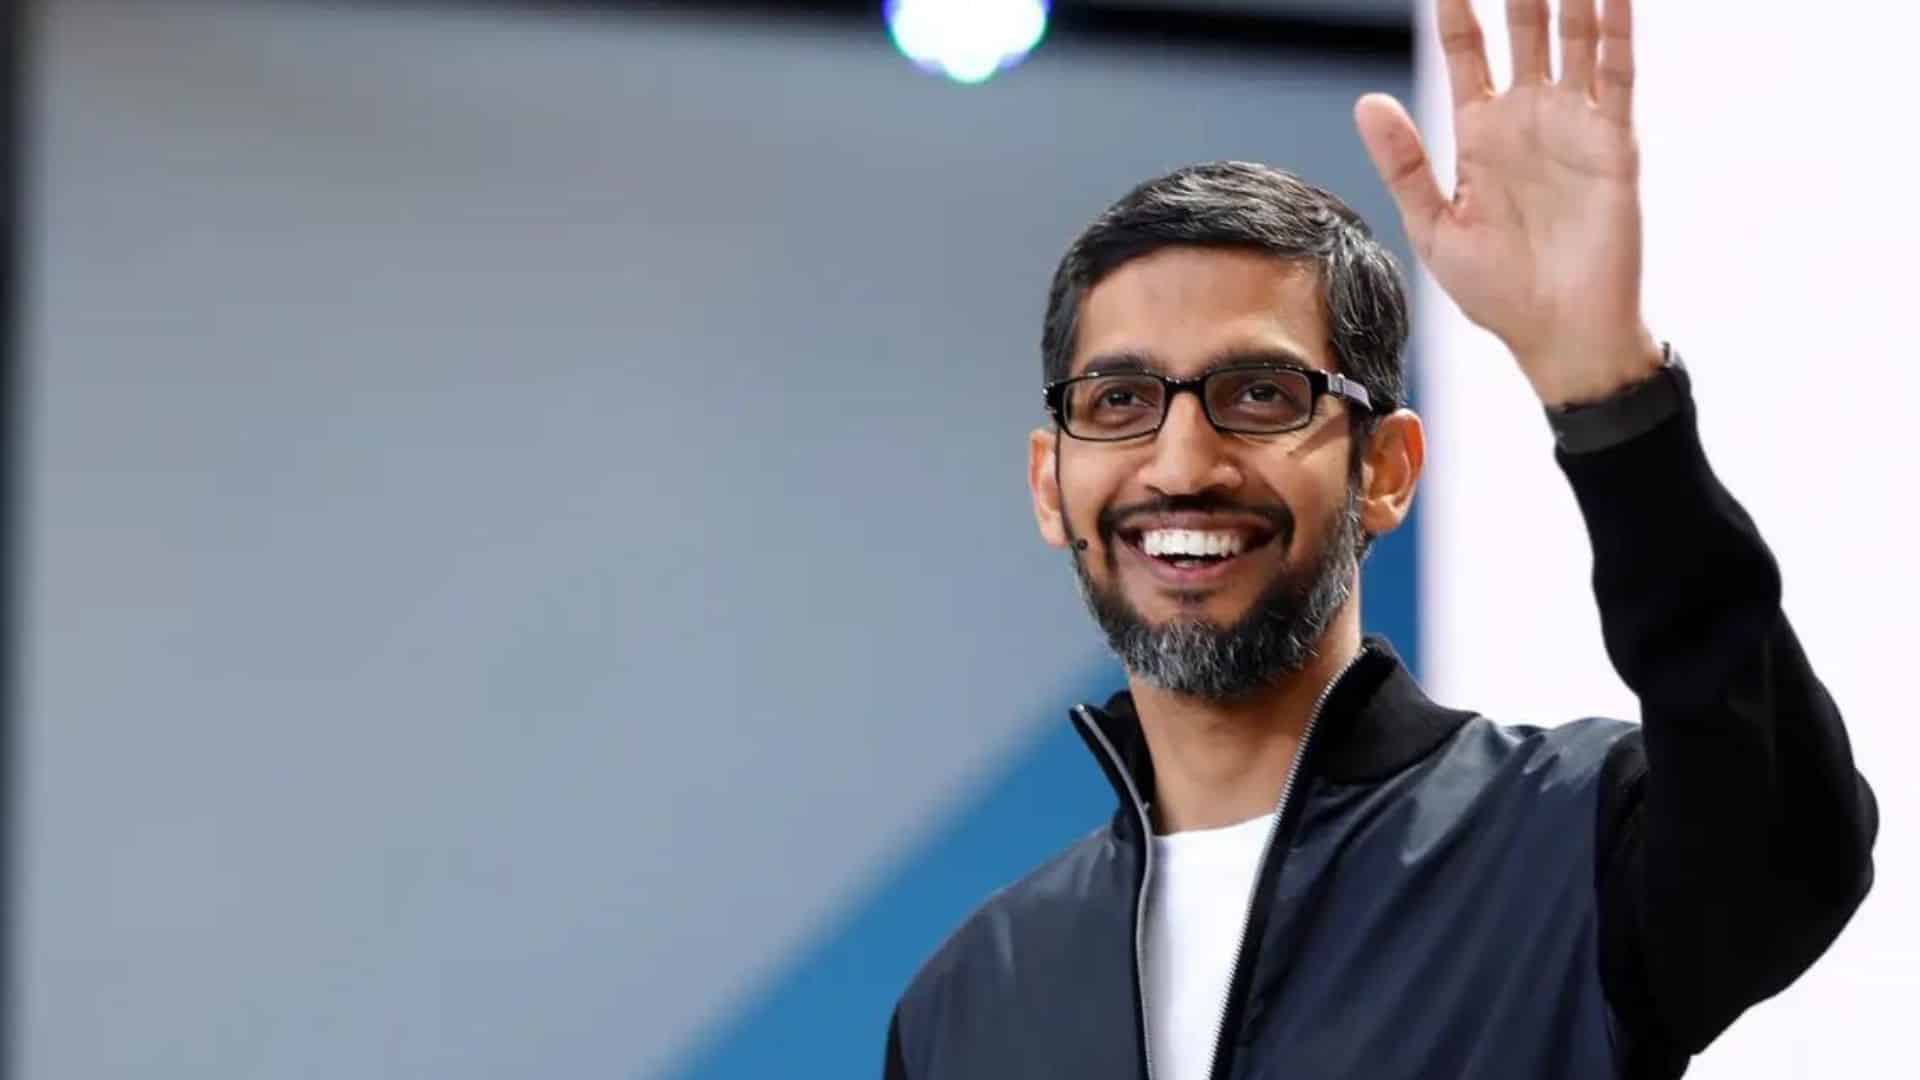 Sundar Pichai: How Wealthy is The CEO of Google?